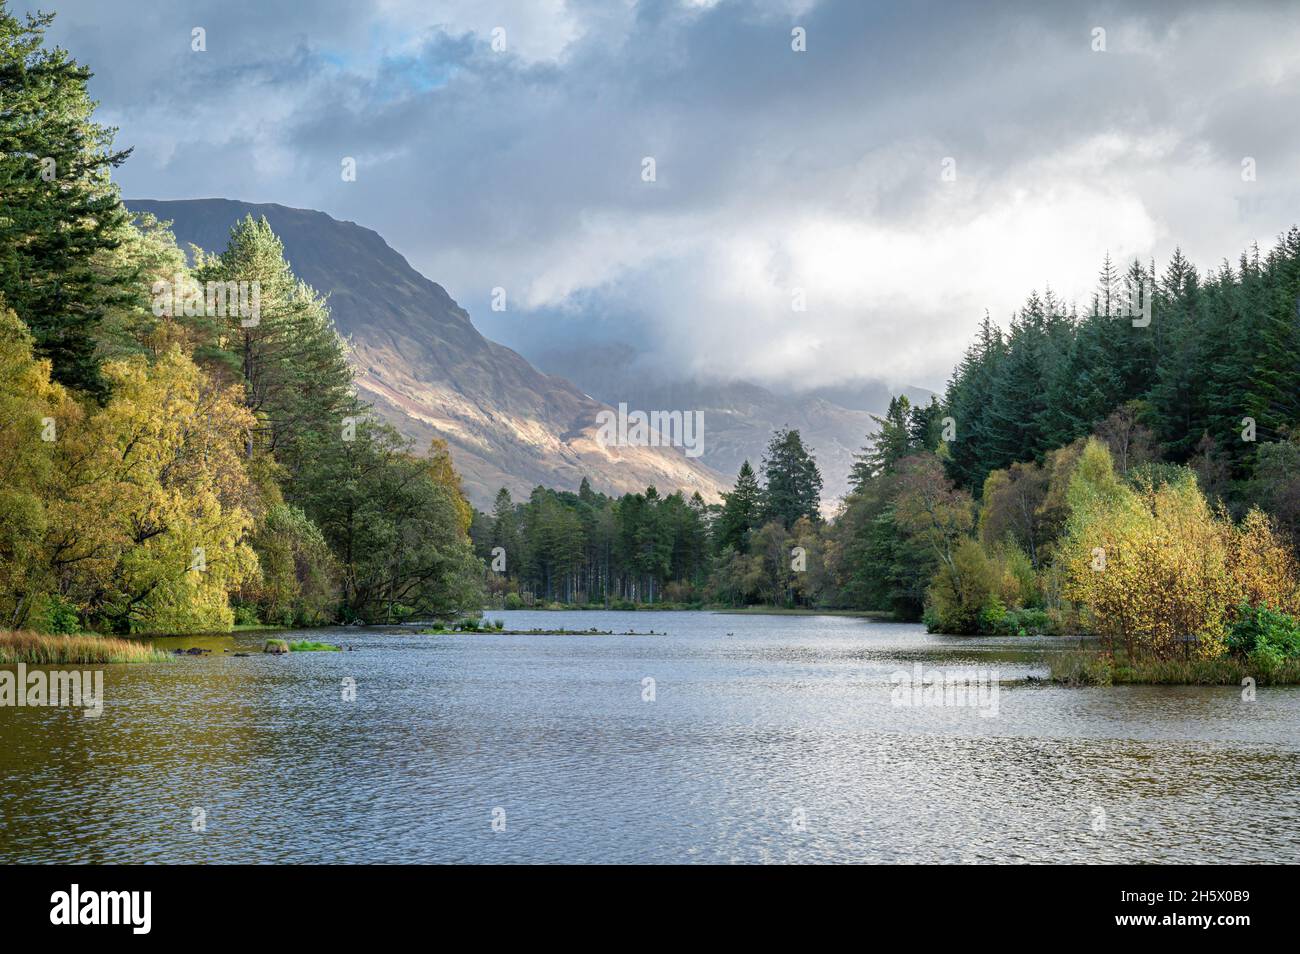 The natural landscape of the Scottish Highlands at Glencoe Lochan Stock Photo